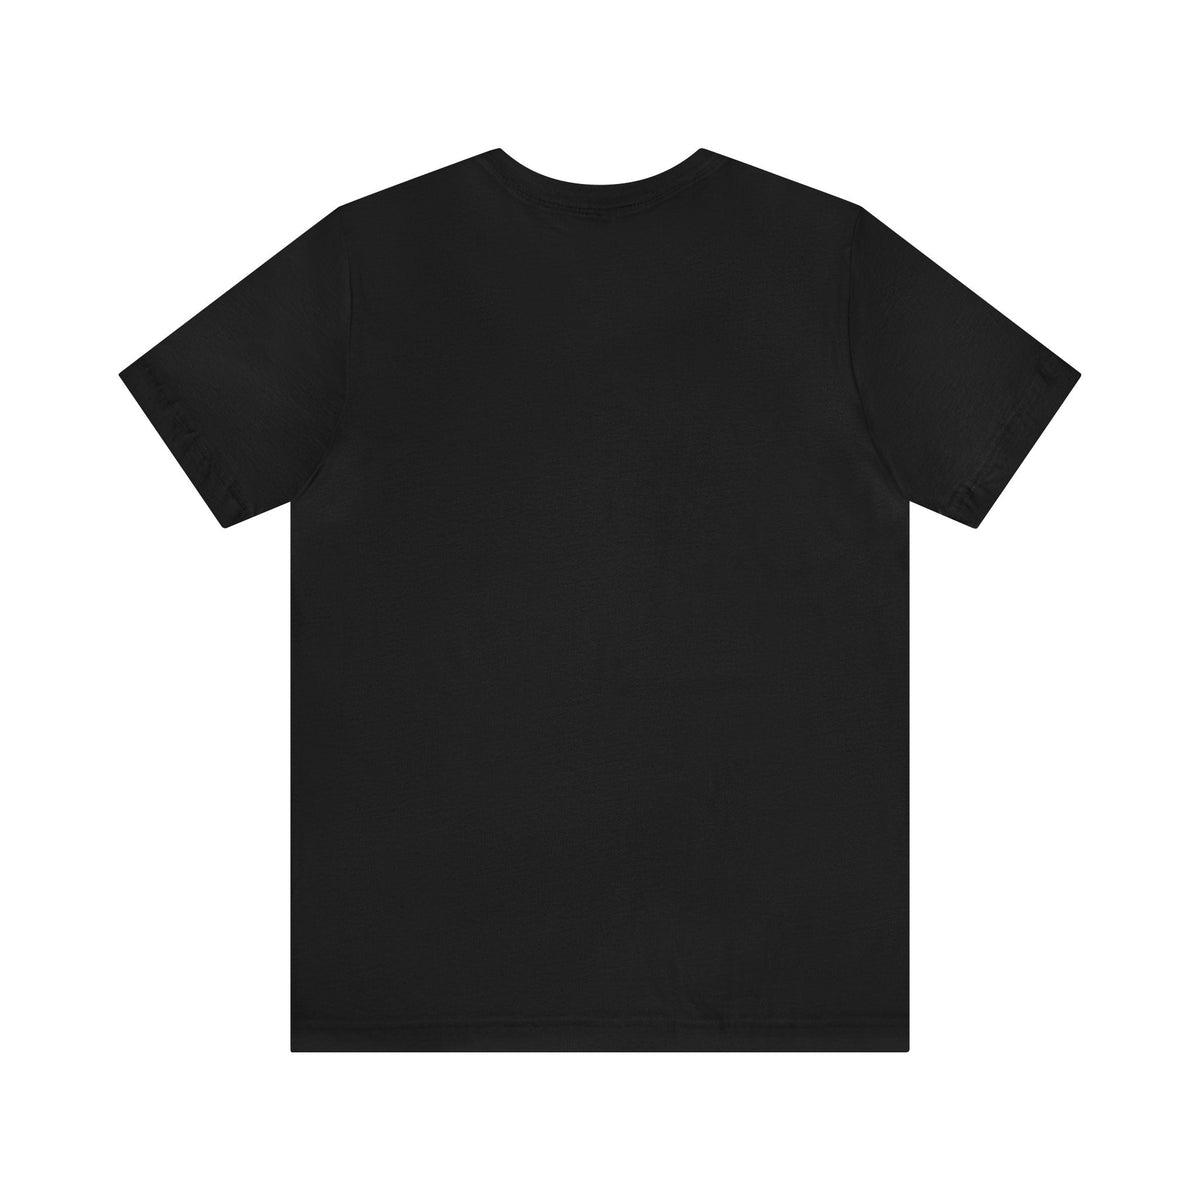 Yeehaw T-shirt | Emoji Cowboy Tee | Women's Western Graphic Tee T-Shirt TheFringeCultureCollective